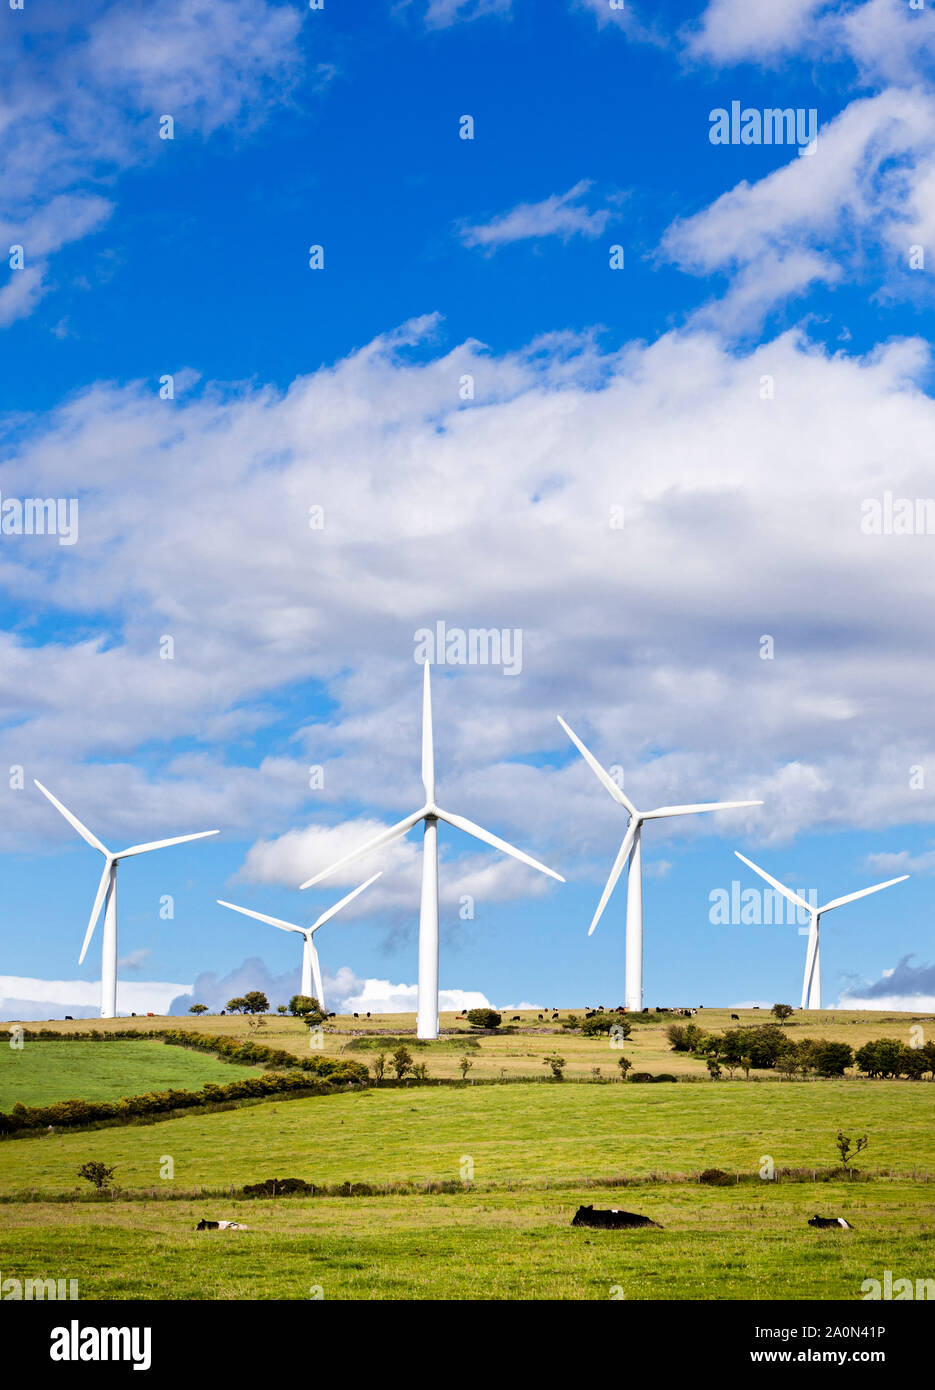 Wind farm, Rural England, UK Banque D'Images